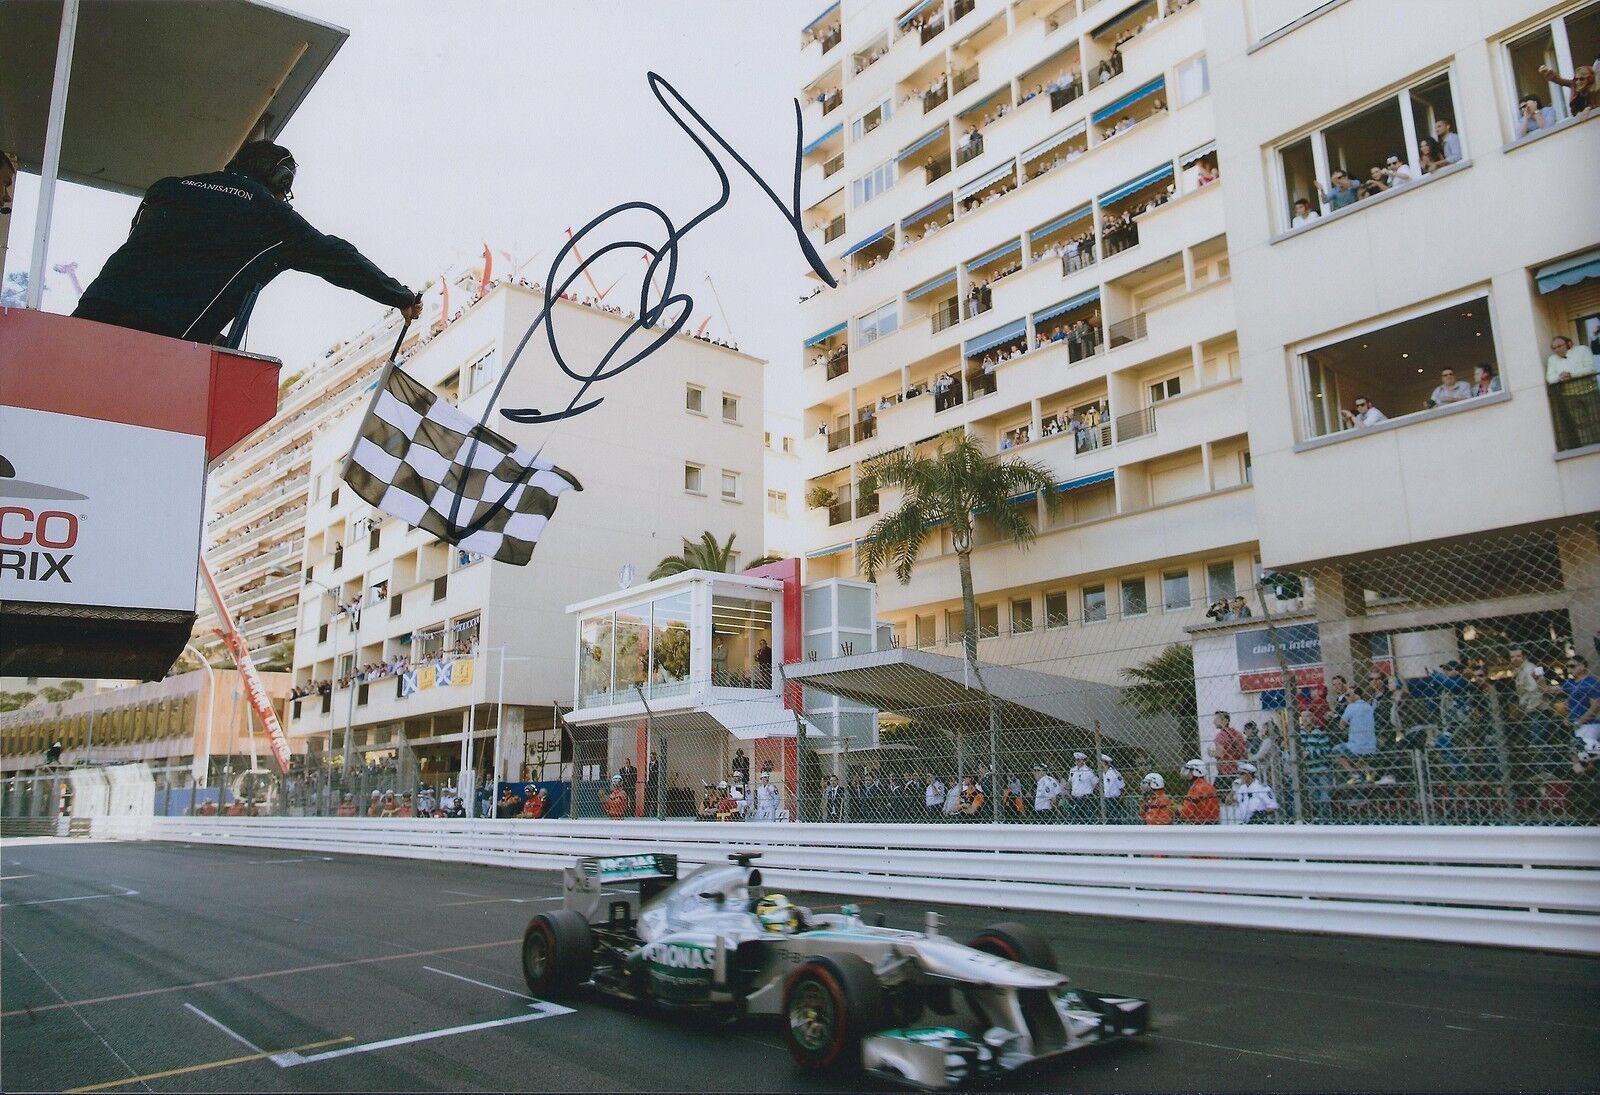 Nico ROSBERG SIGNED 12x8 Photo Poster painting MERCEDES MONACO GP Winner AFTAL COA Autograph